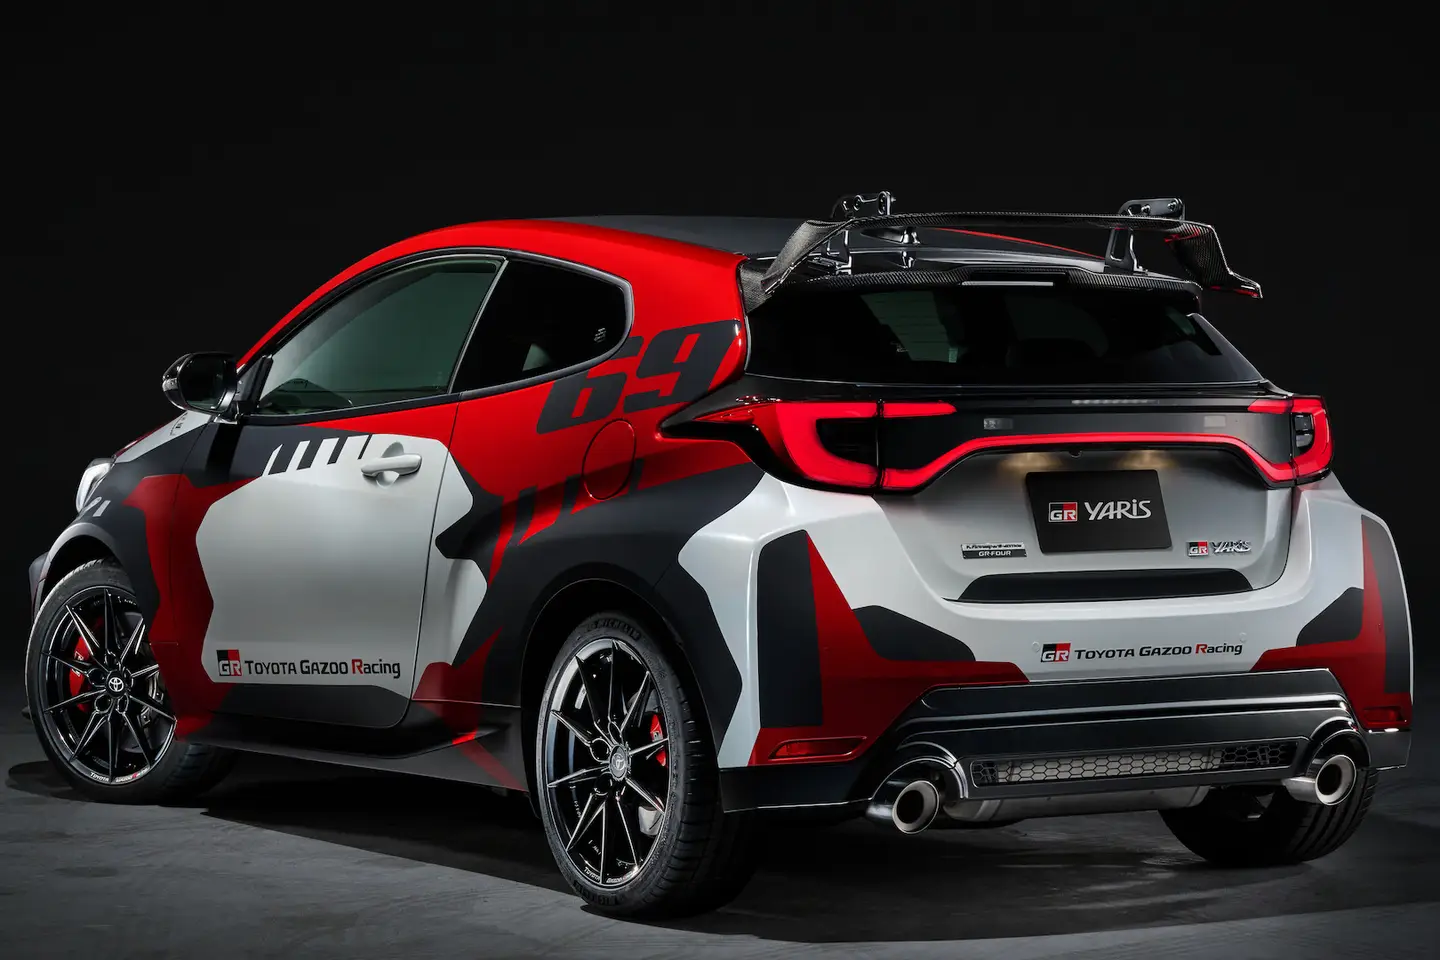 Toyota GR Yaris Rovanperä Edition Introduces a 'Donut' Mode